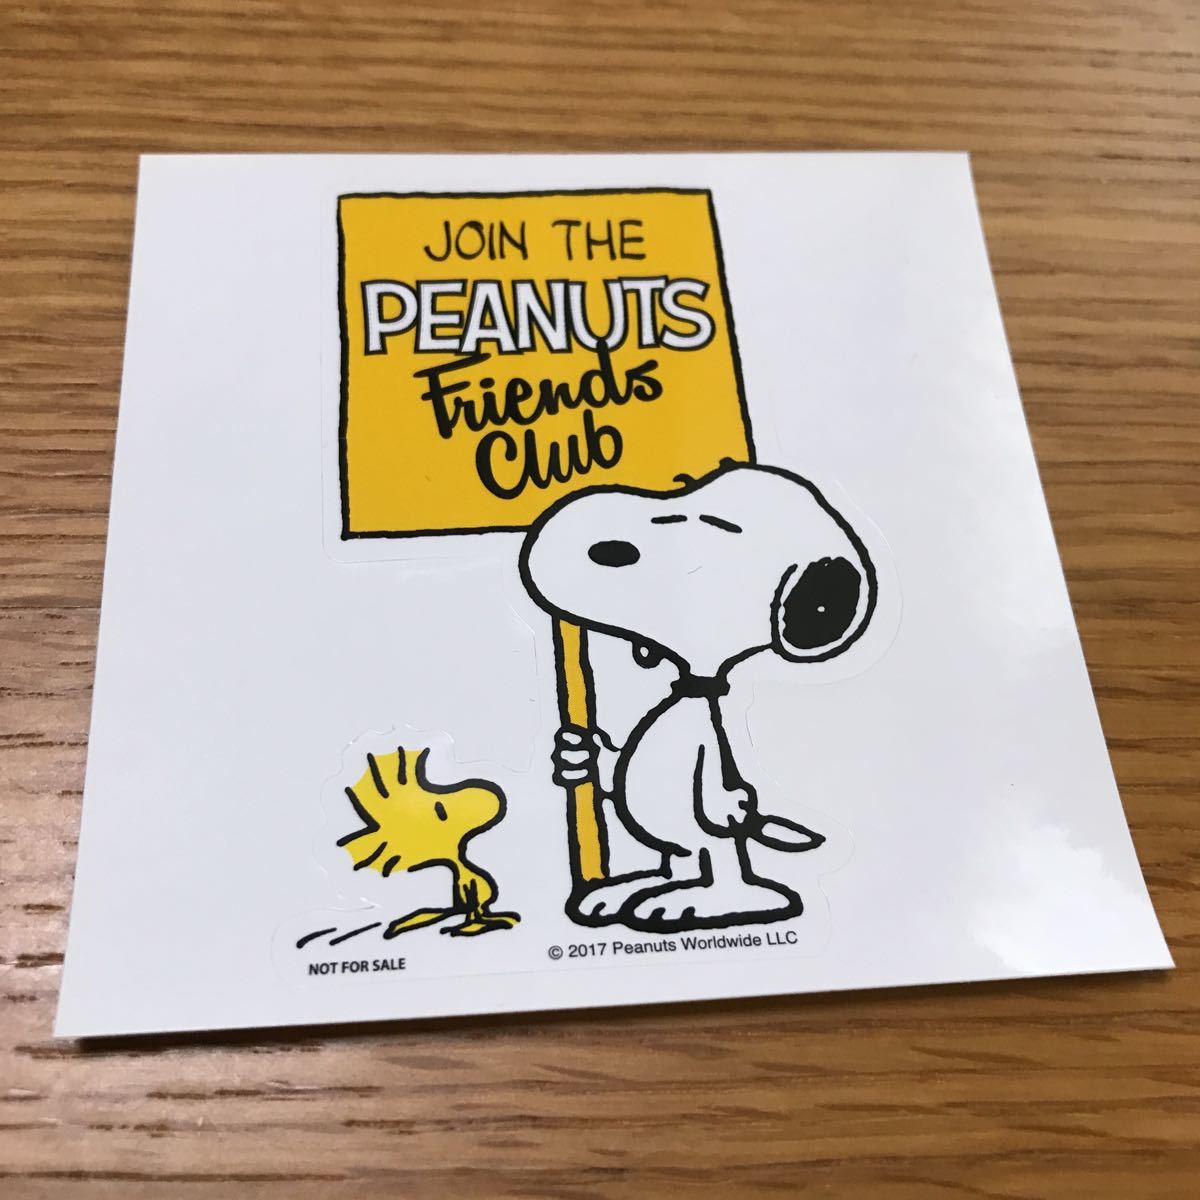  не продается Snoopy Peanuts вентилятор Club стикер наклейка Snoopy Mu jiam